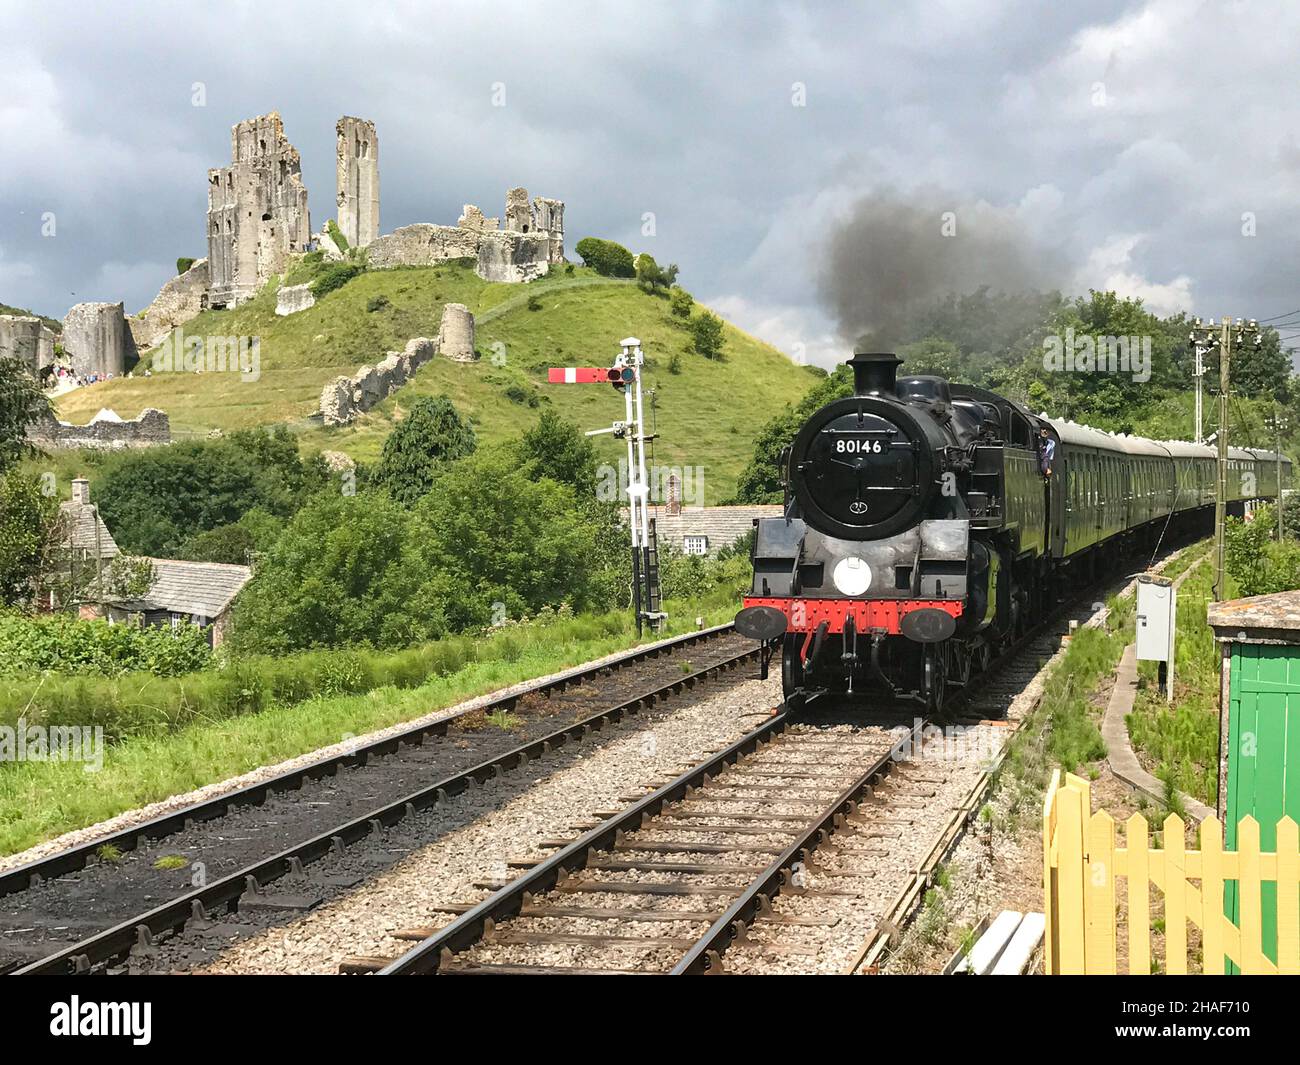 Corfe Castle, United Kingdom - July 10th, 2017 : A steam train in the village of Corfe Castle in Dorset, UK. A restored steam train arriving at the ra Stock Photo